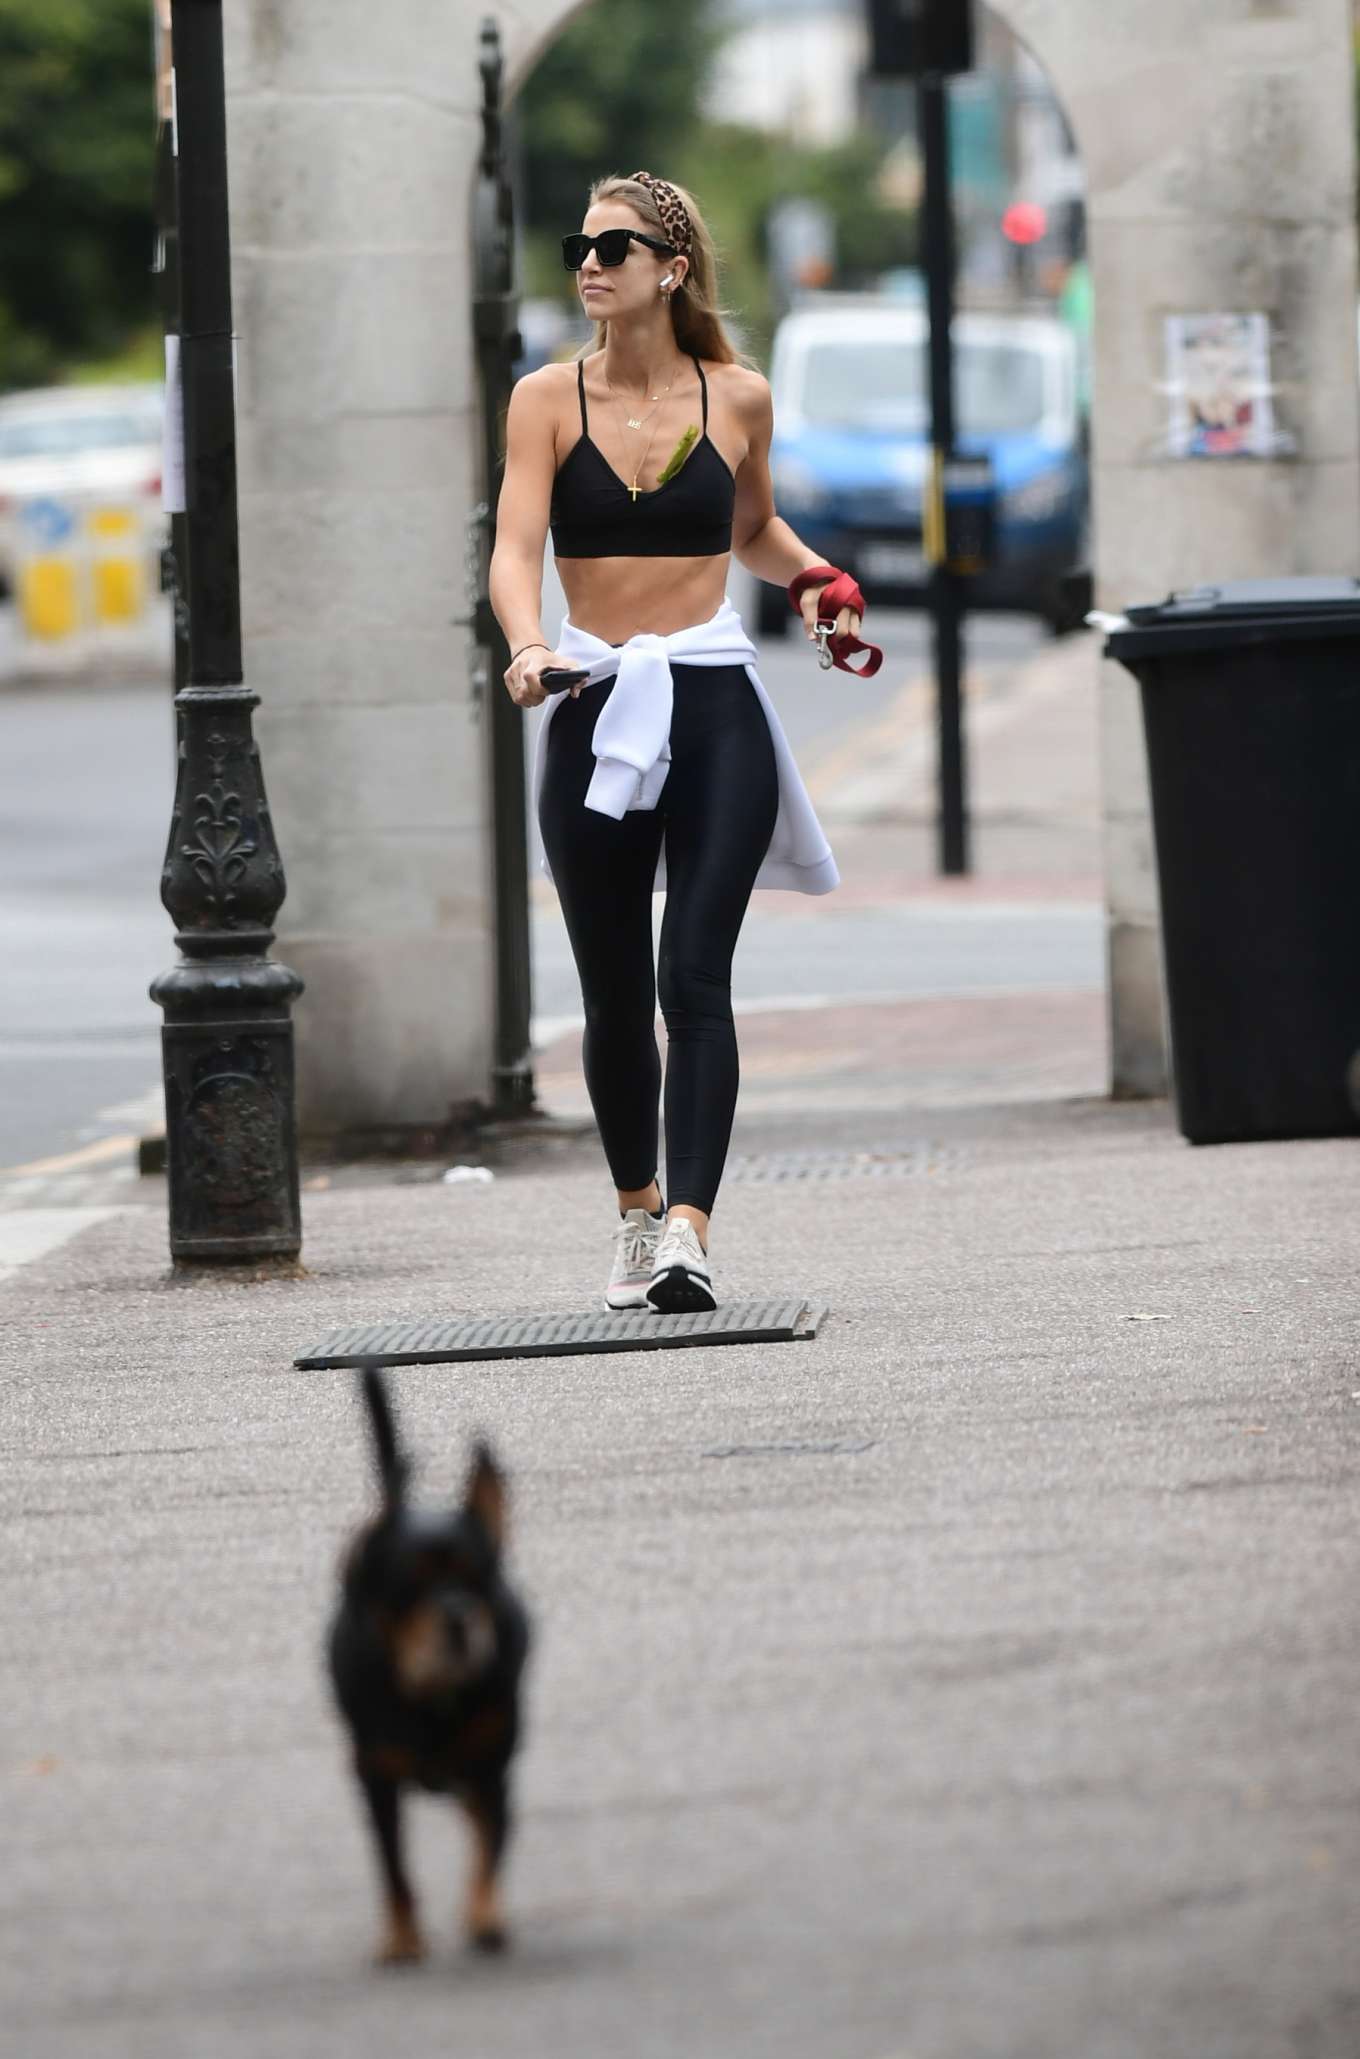 Vogue Williams â€“ Jogging in London